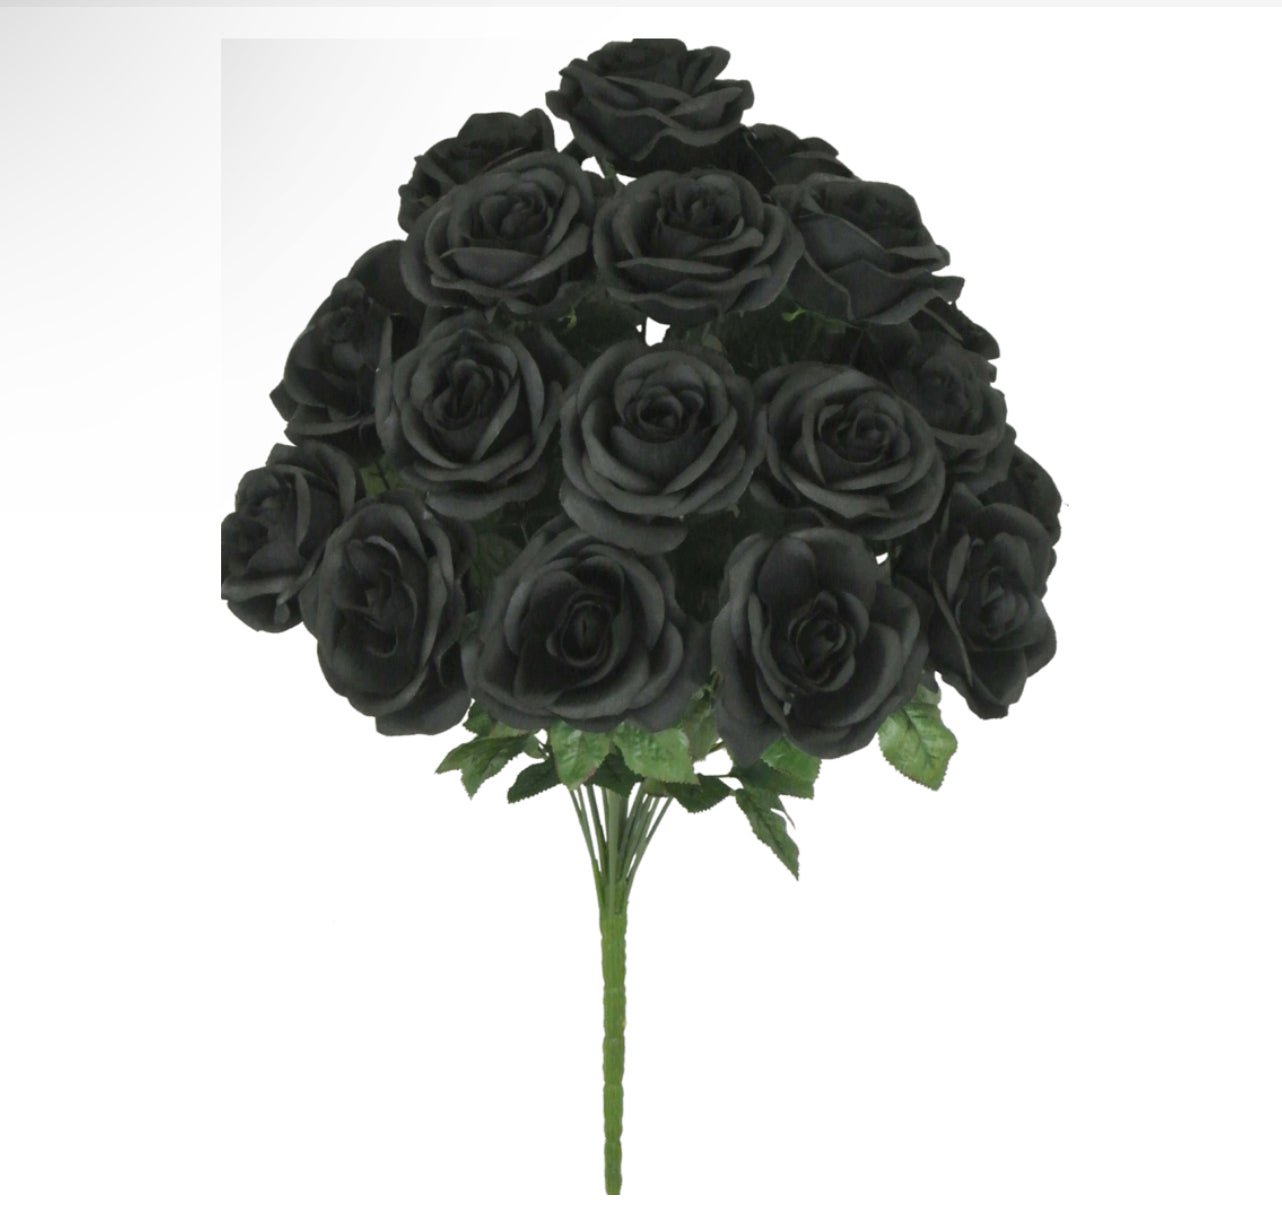 Black rose bush - Greenery Market